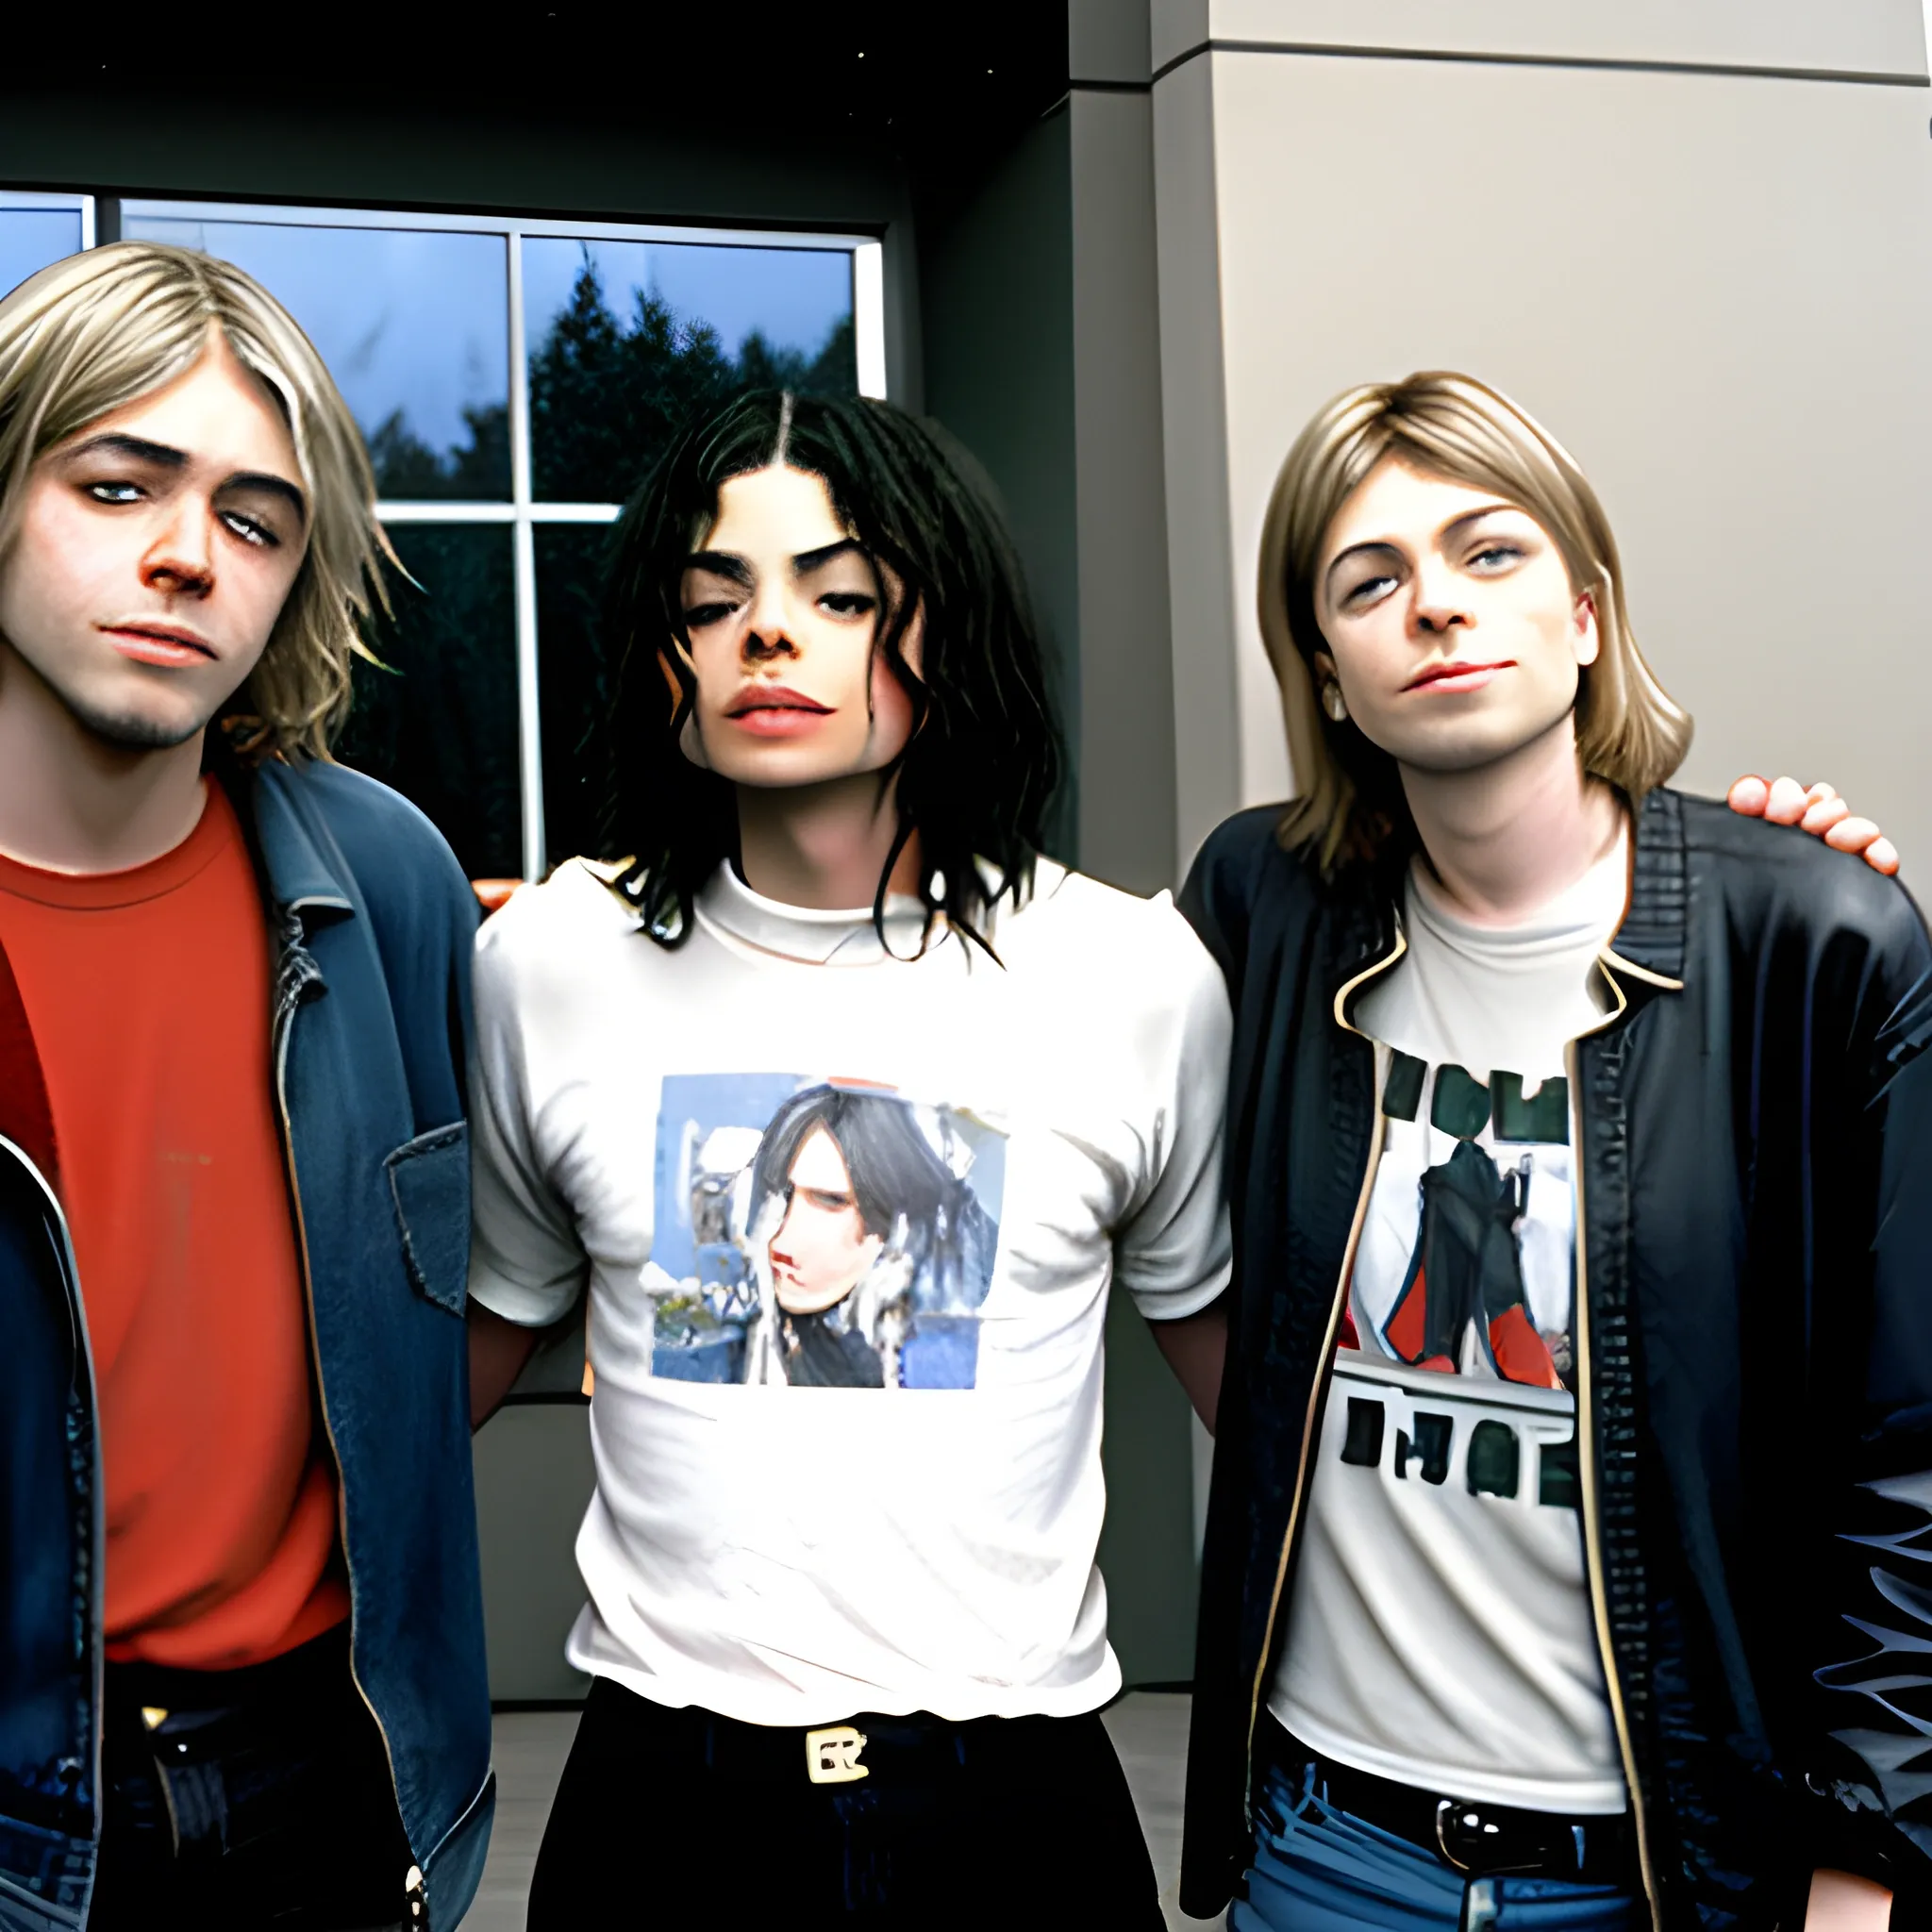 Kurt Cobain with Bill Gates and Michael Jackson